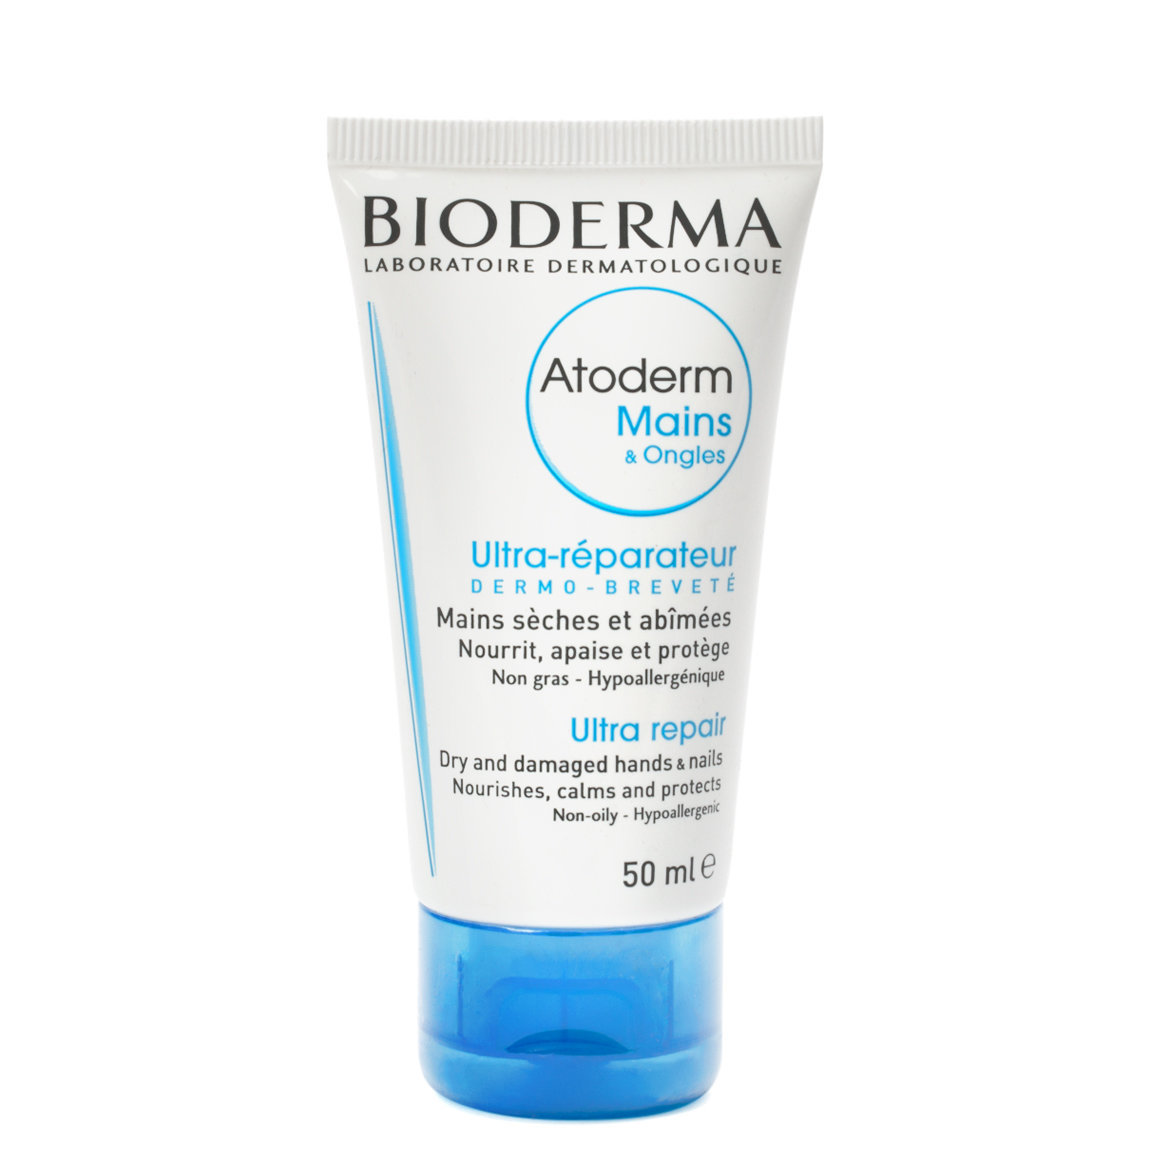 Bioderma Atoderm Hand & Nail Cream Single alternative view 1 - product swatch.